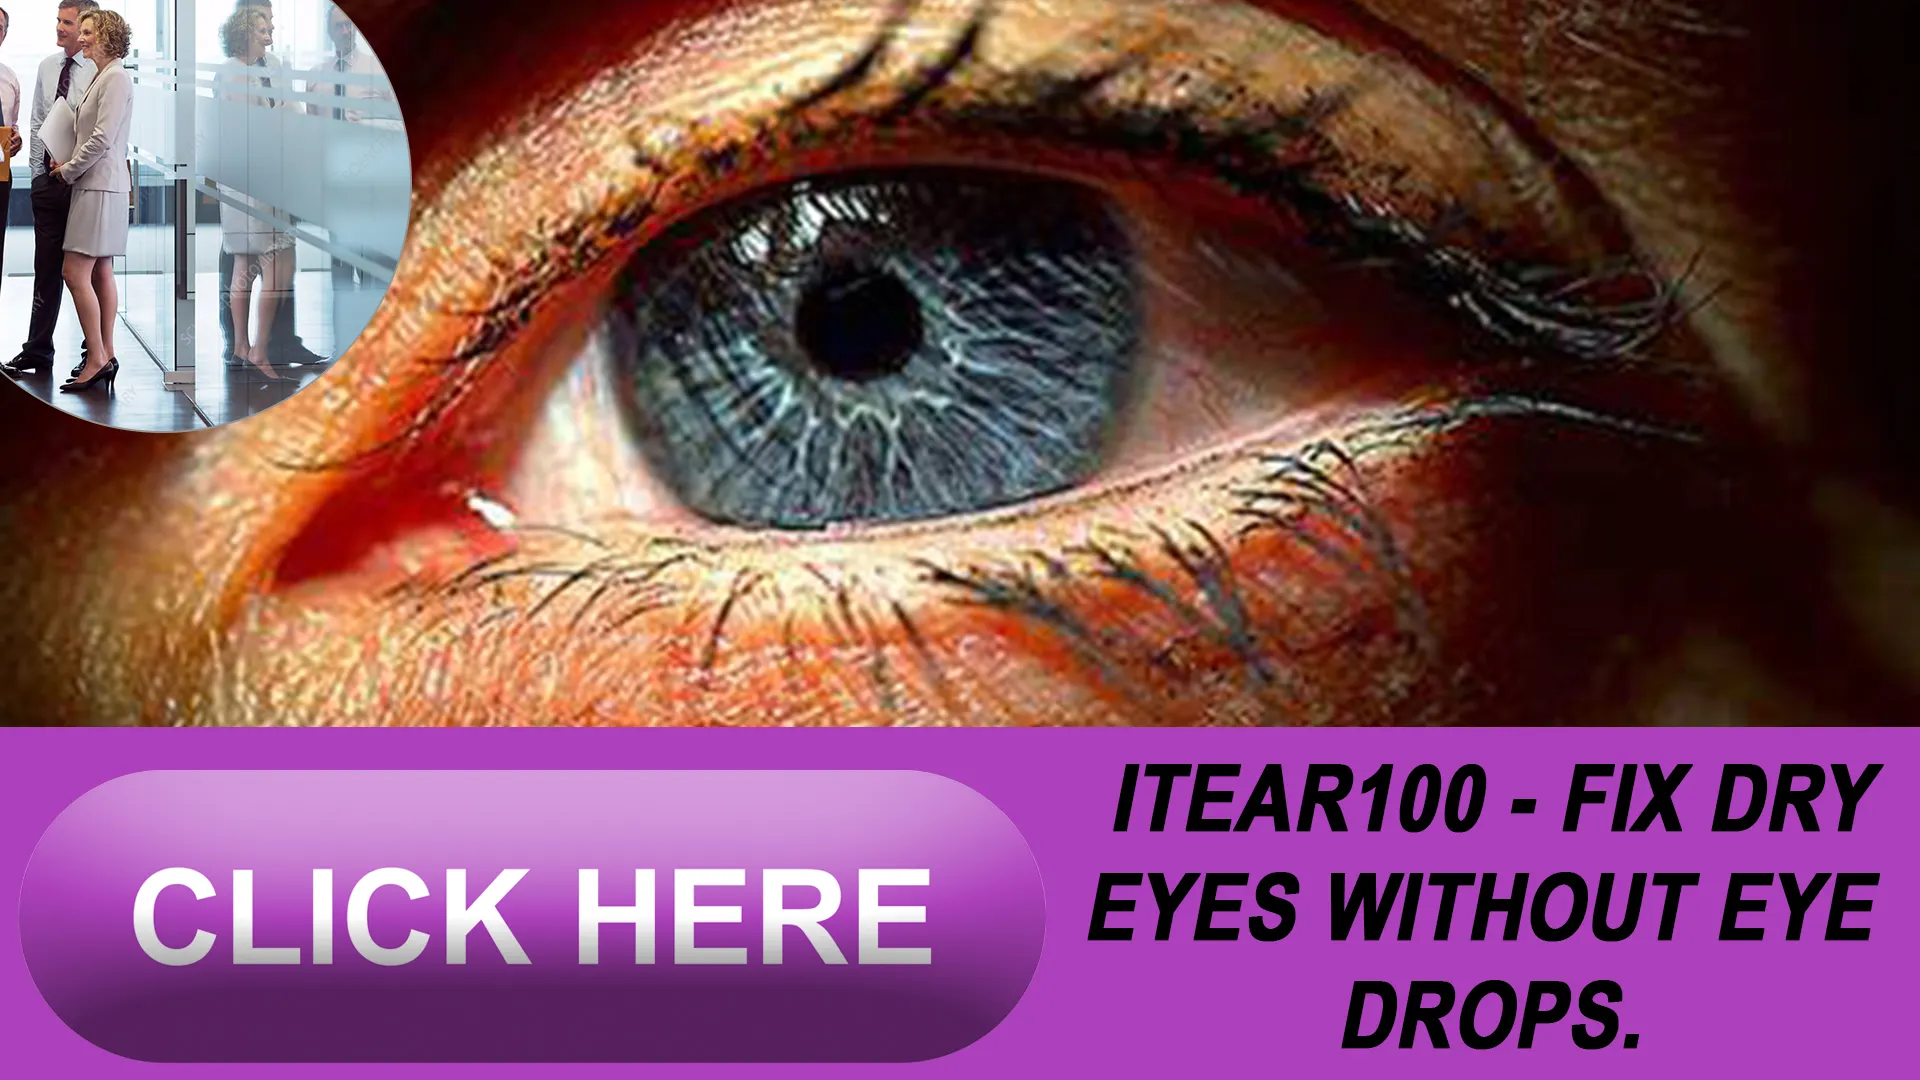 Seasonal Tips for Managing Dry Eye Symptoms